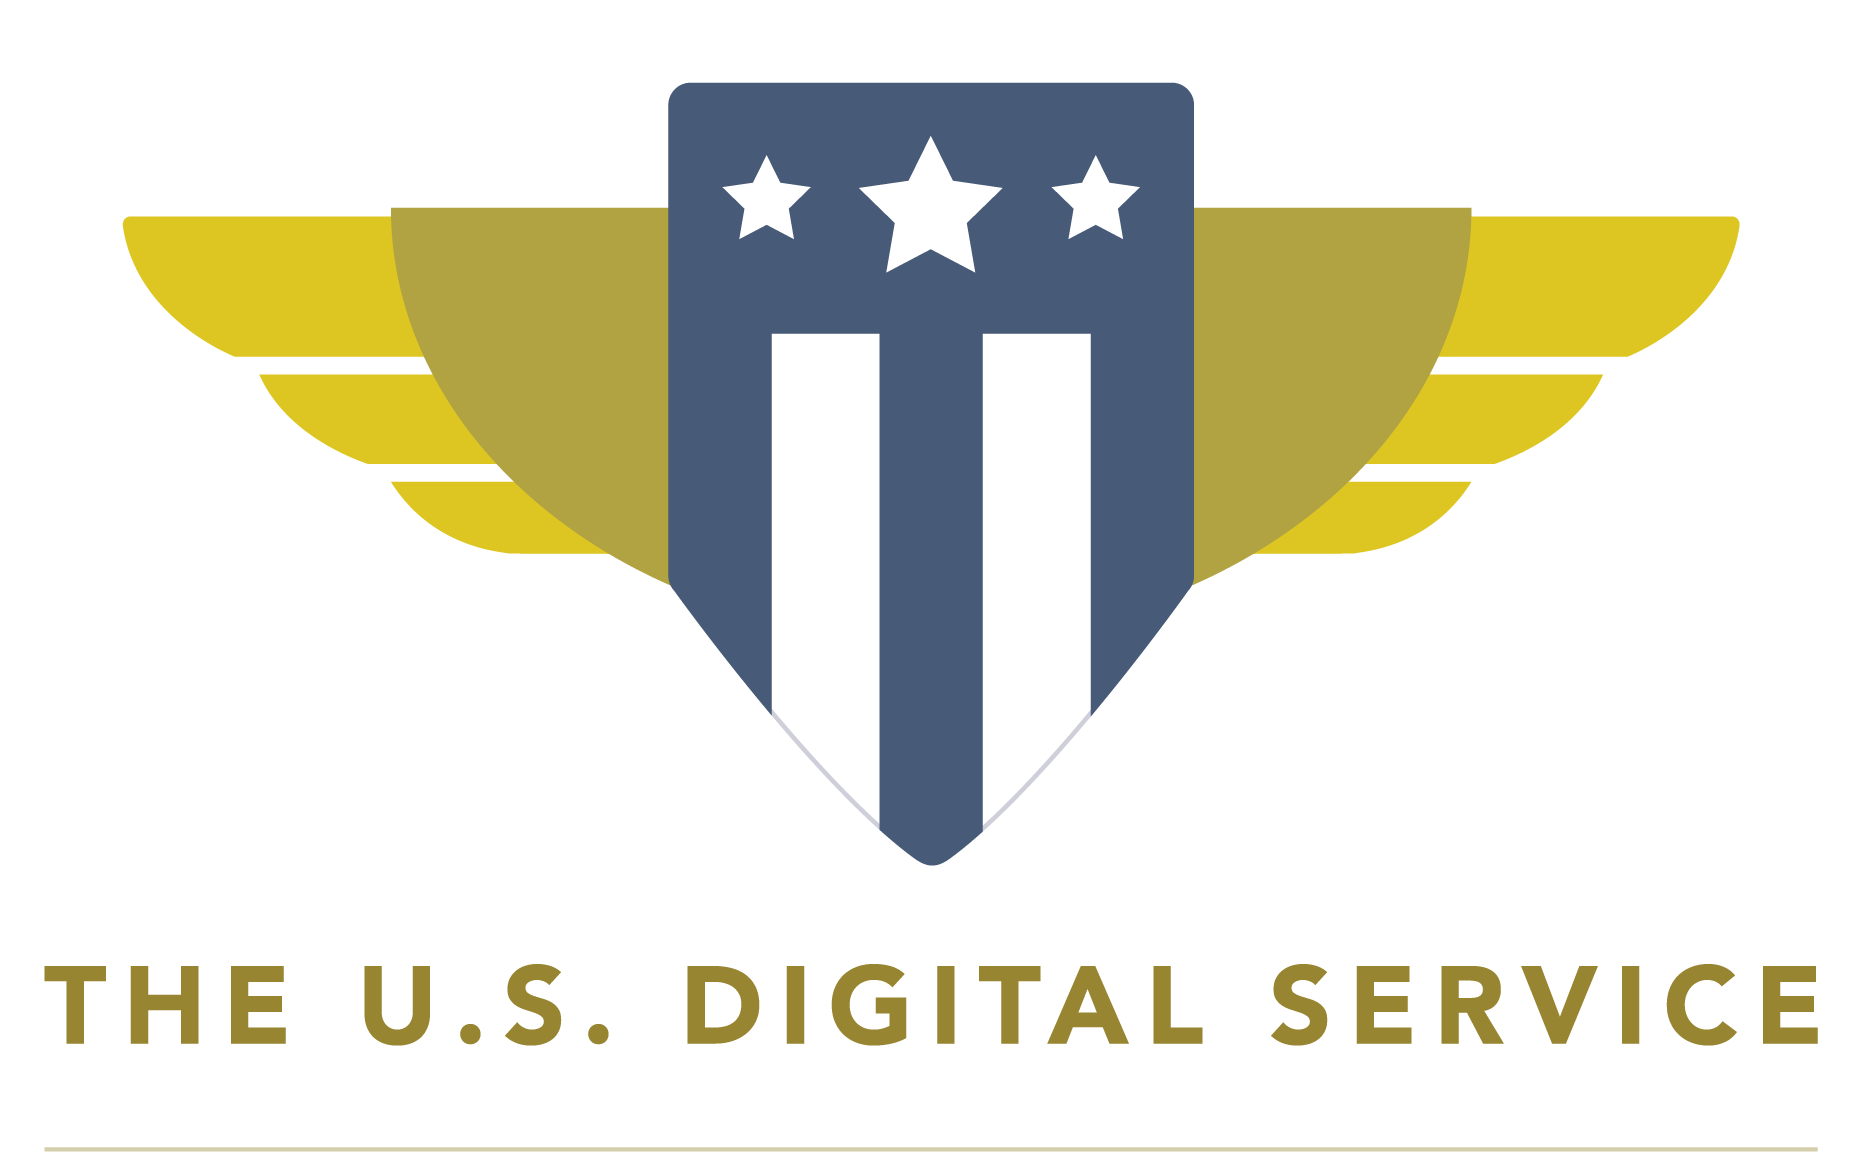 United States Logo - United States Digital Service. The United States Digital Service is